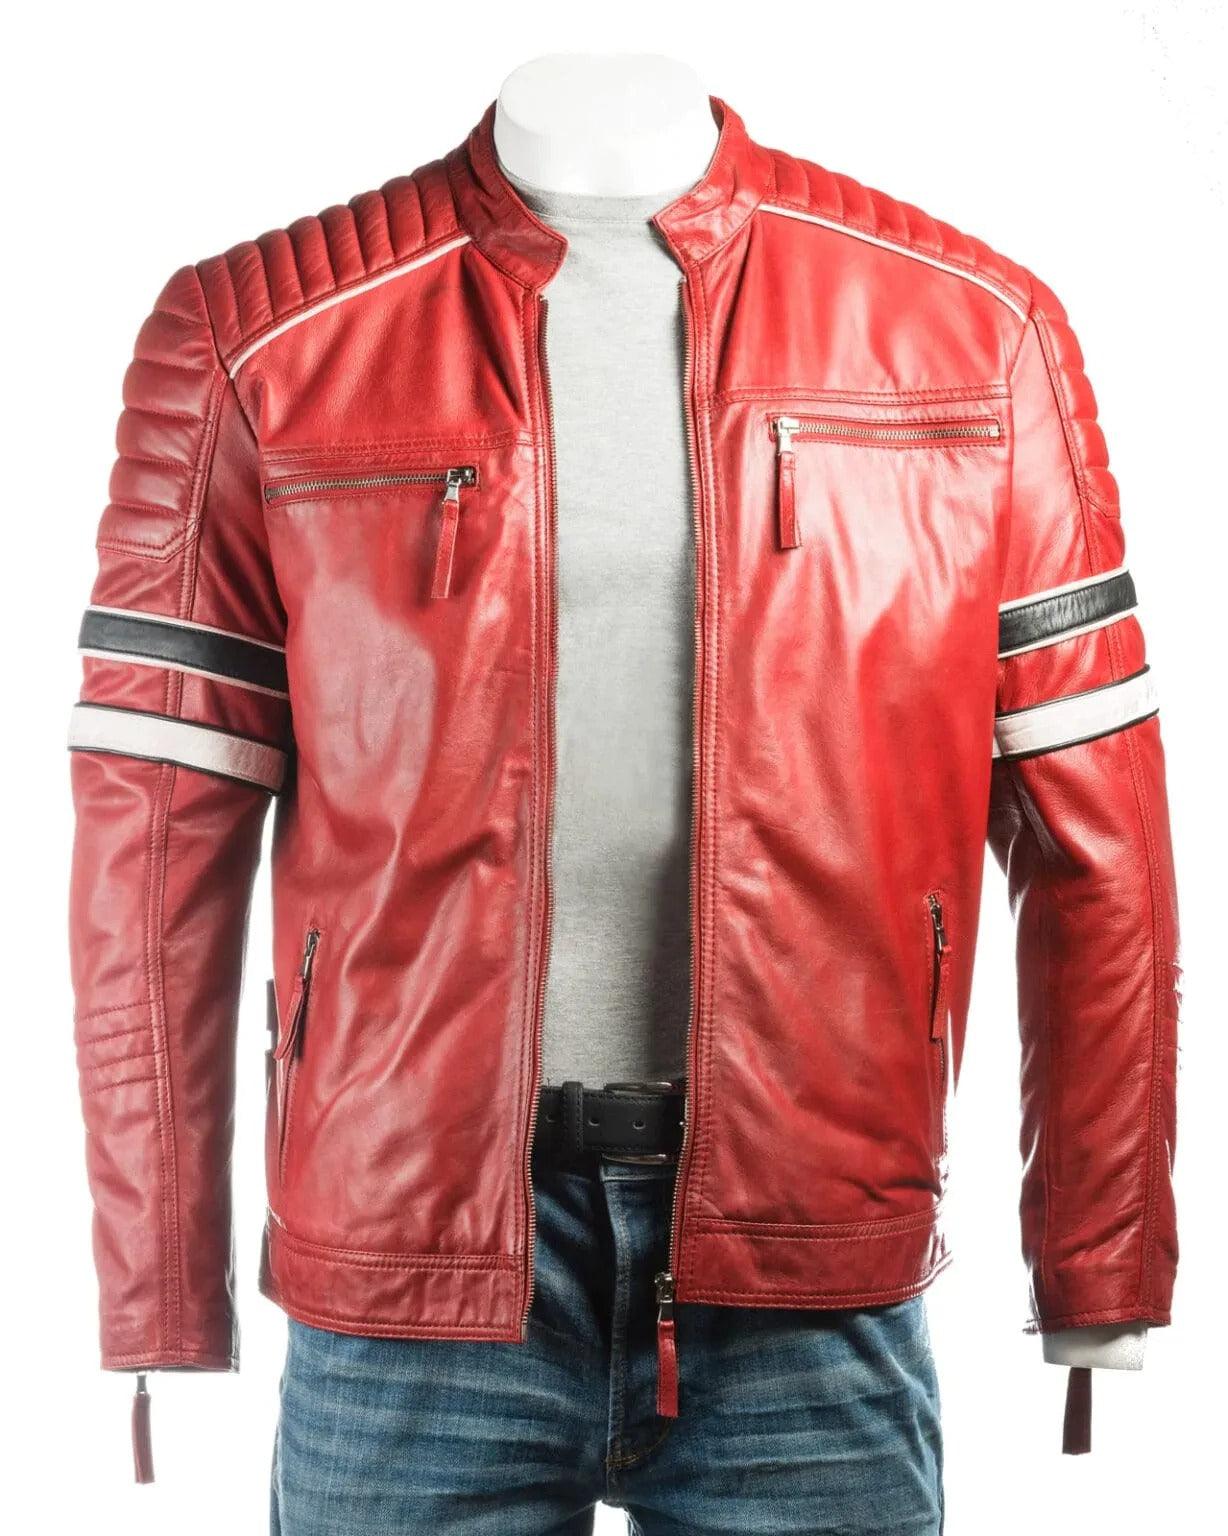 Men’s Red Racing Biker Style Leather Jacket